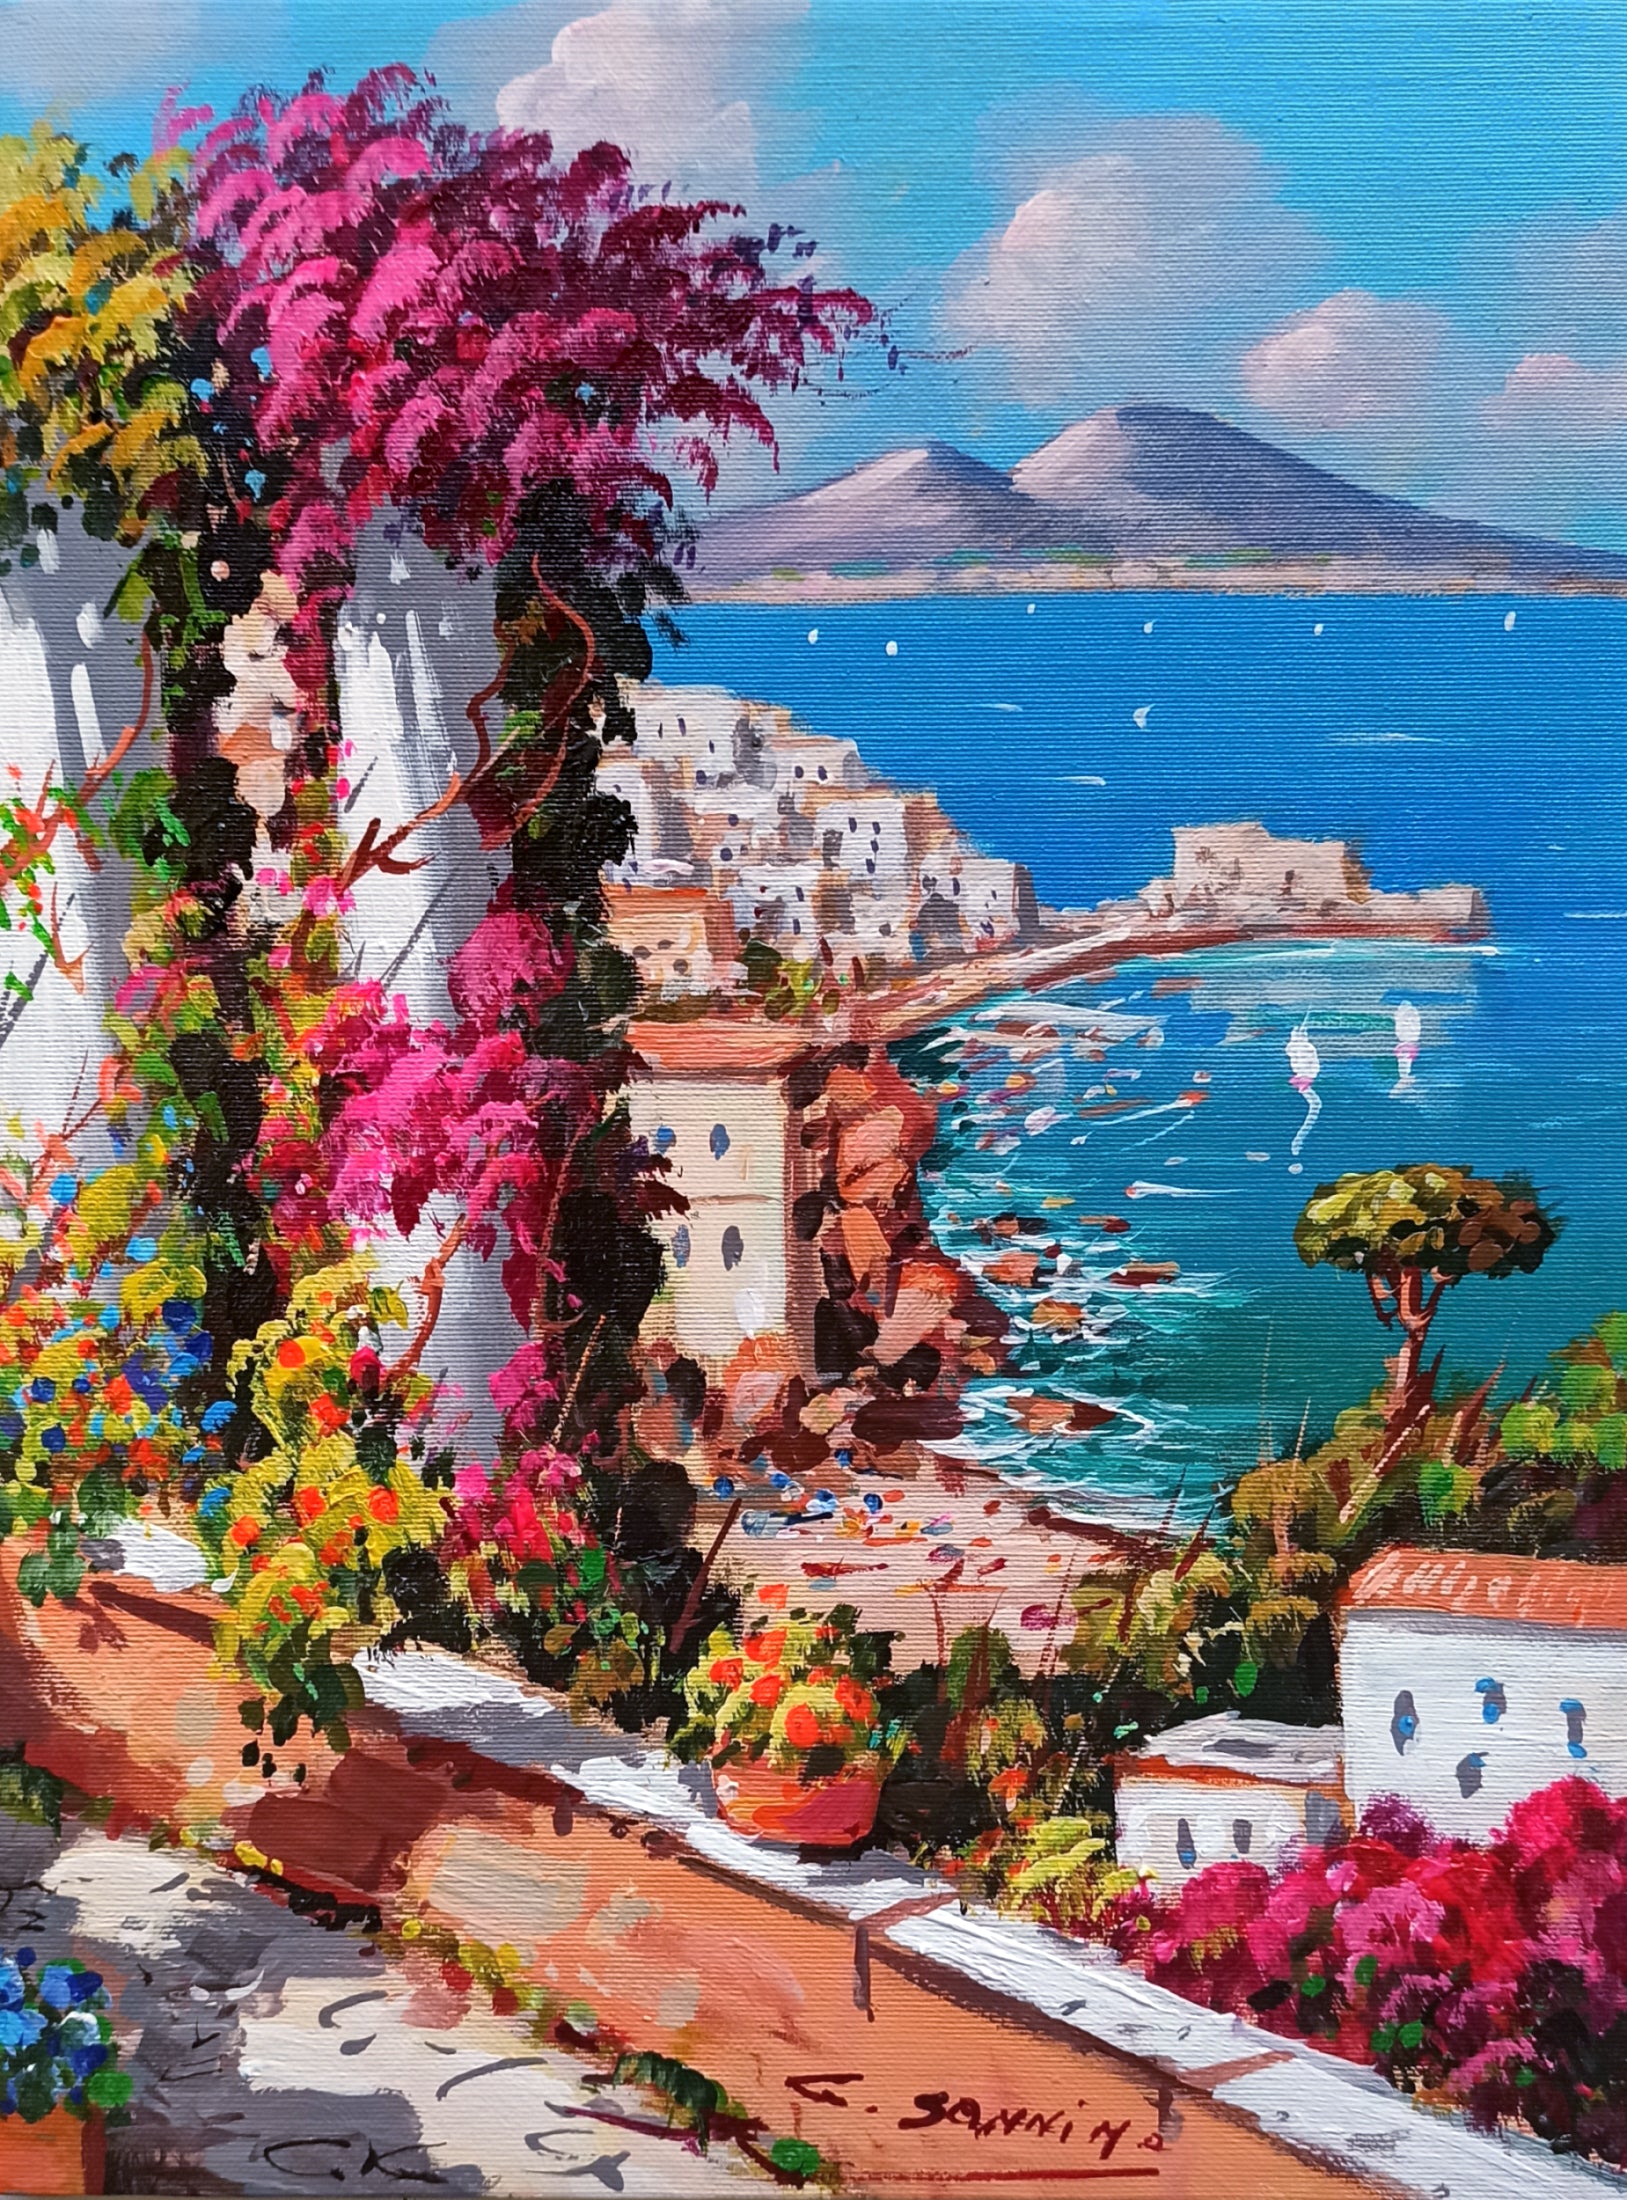 Naples painting by Gio Sannino painter 